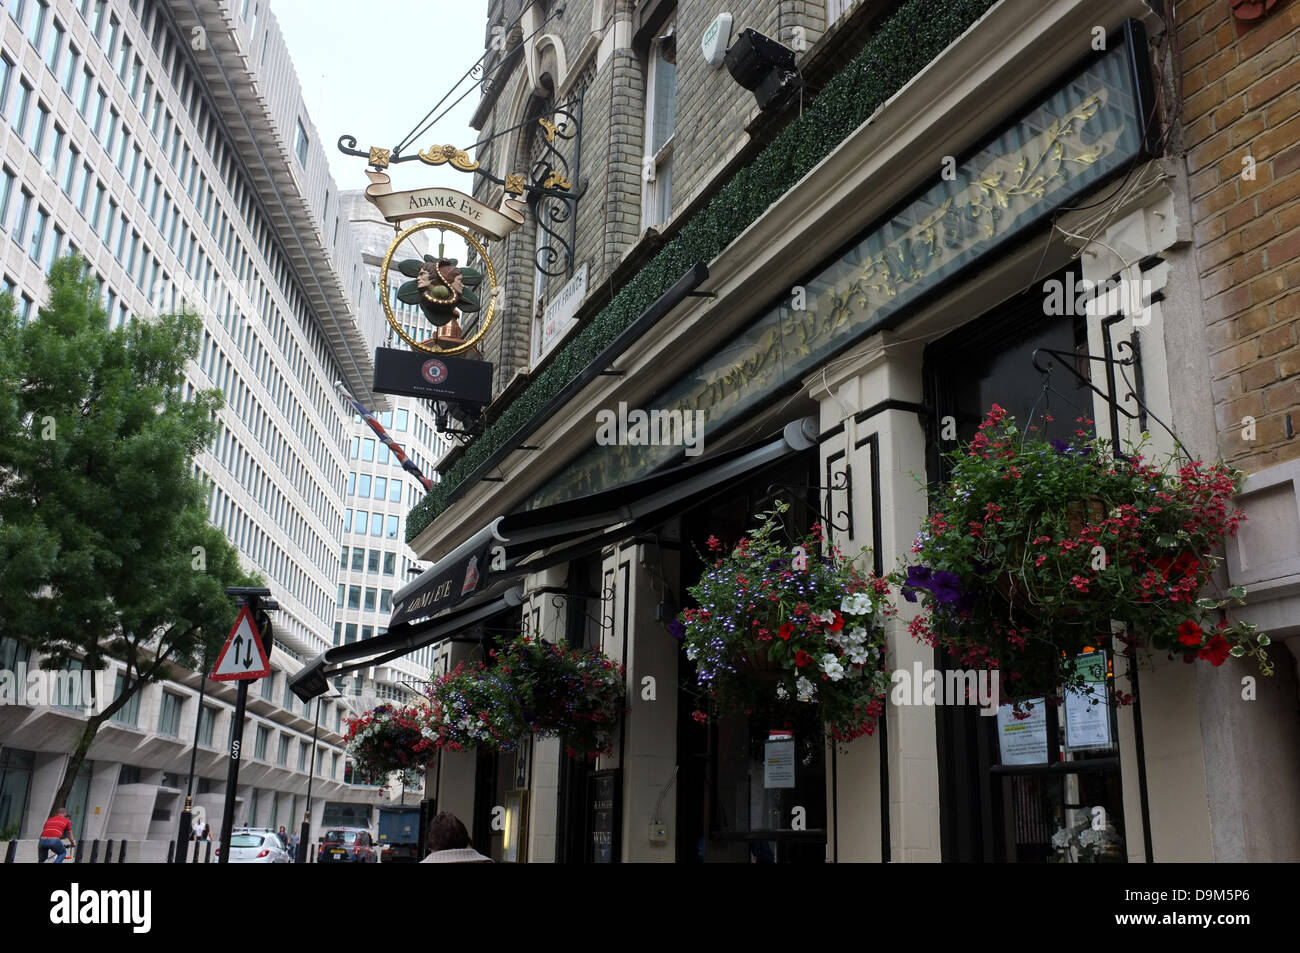 Adamo ed Eva taverna City of Westminster London Regno Unito 2013 Foto Stock